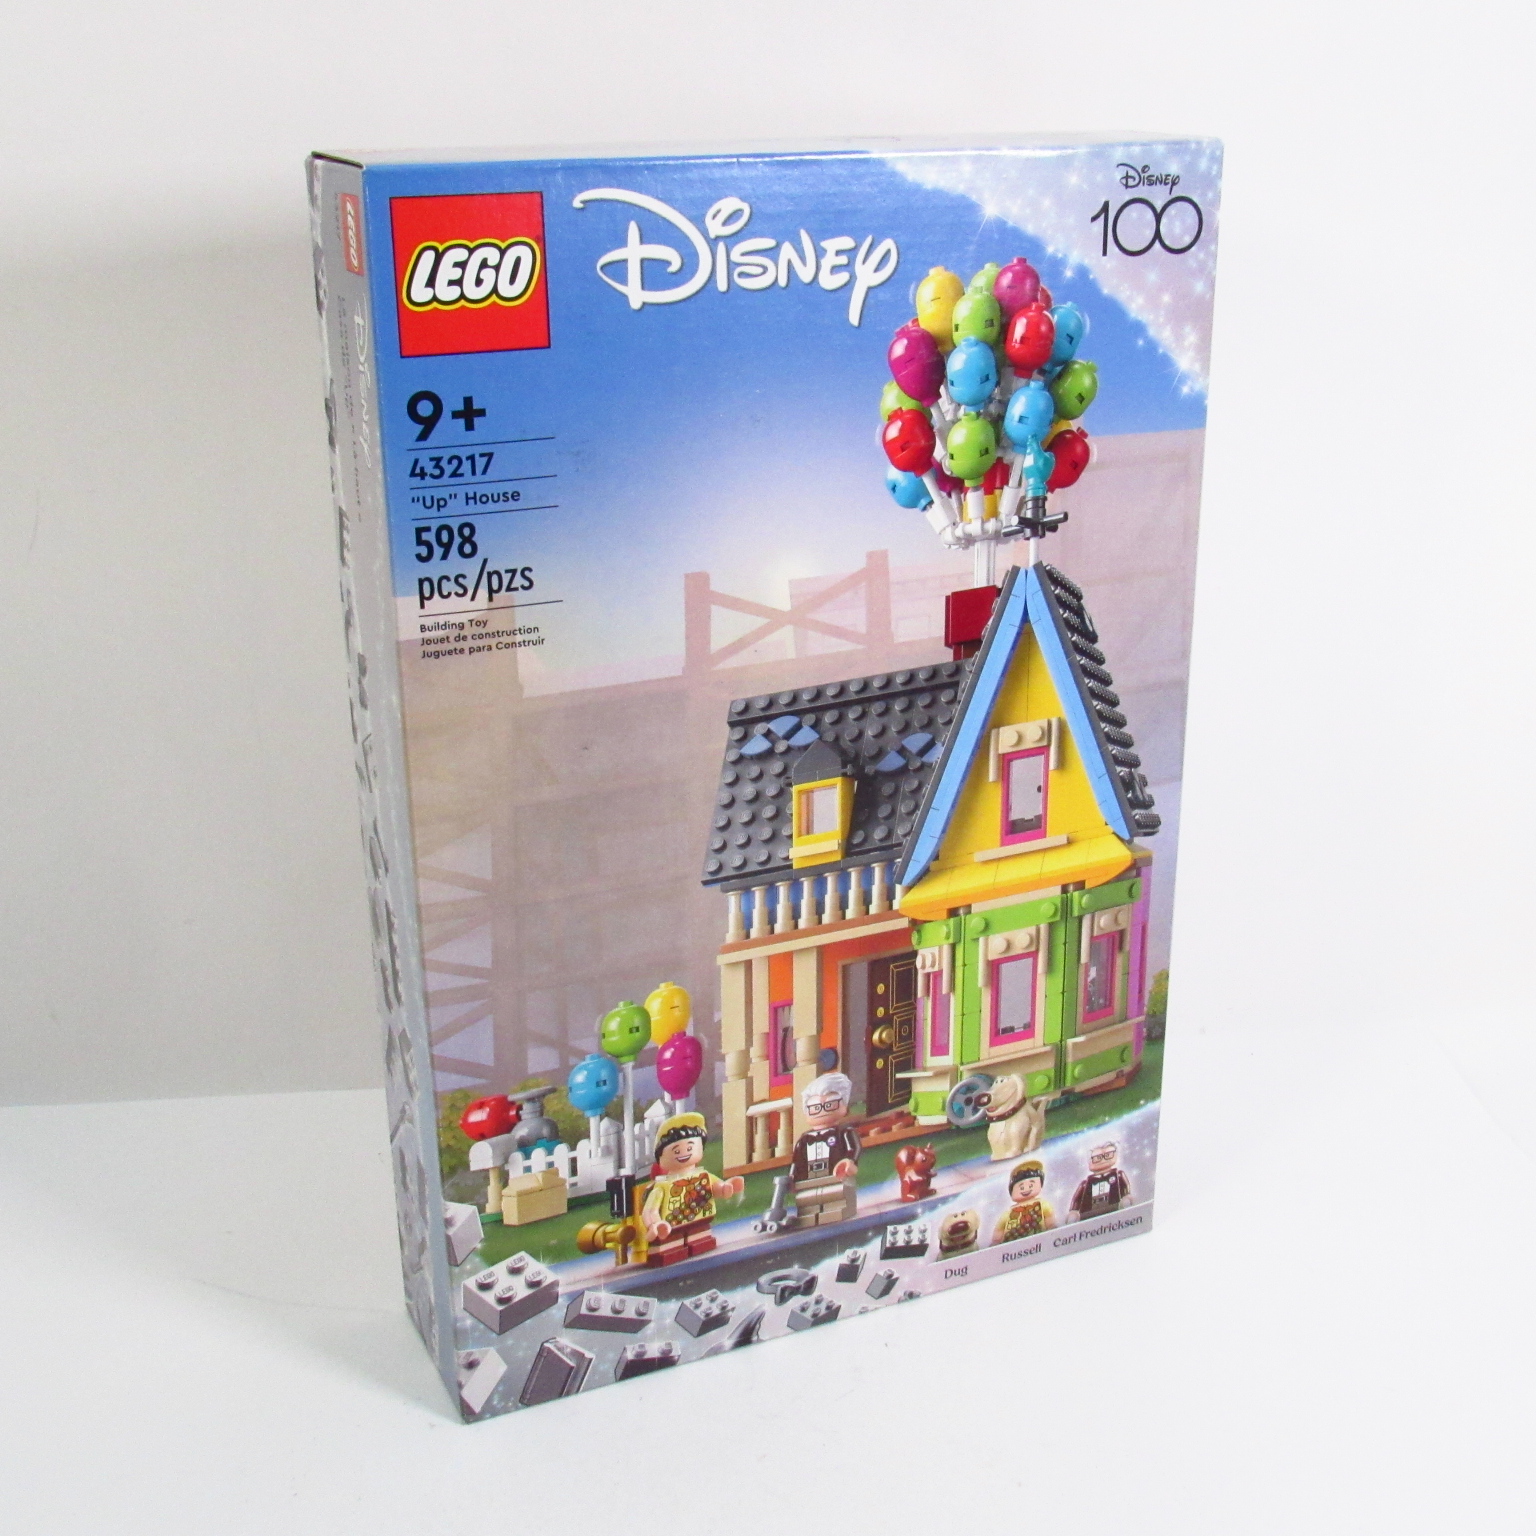 LEGO® Disney and Pixar Up House 43217 Building Toy Set (598 Pieces)